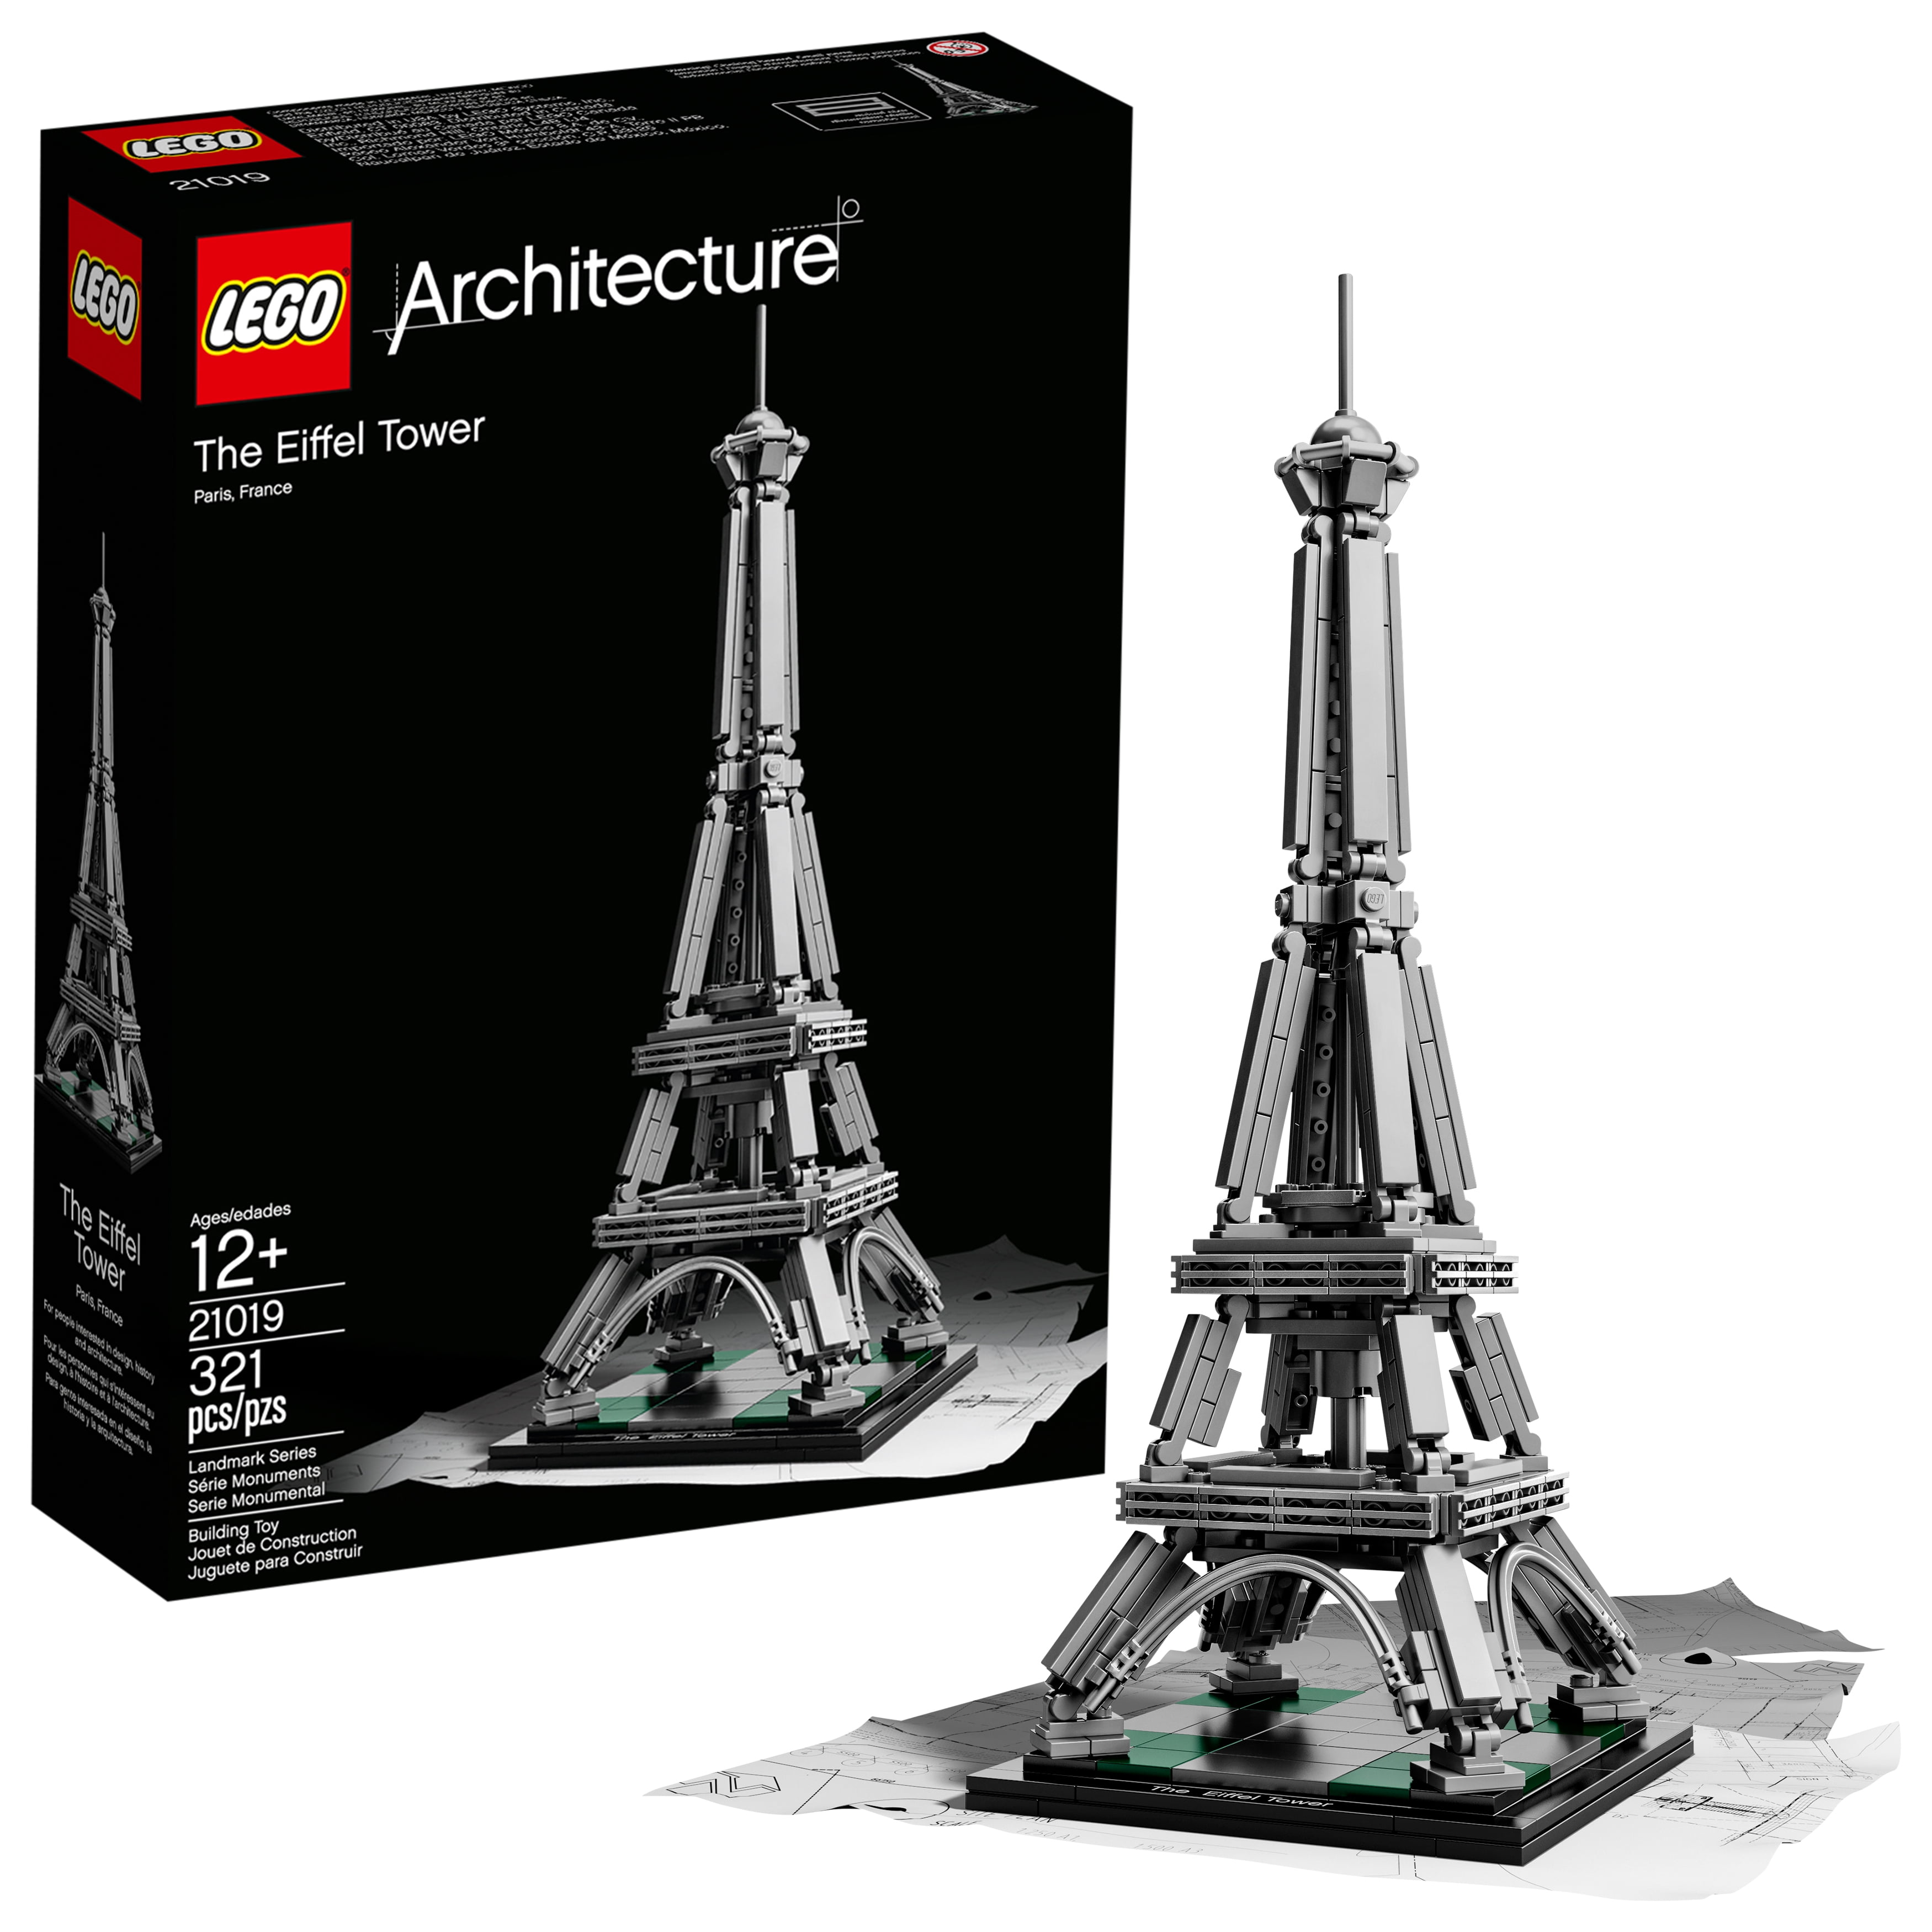 Buy LEGO LEGO Arkitektur 21019 Online at Lowest Price in Ubuy 32703664